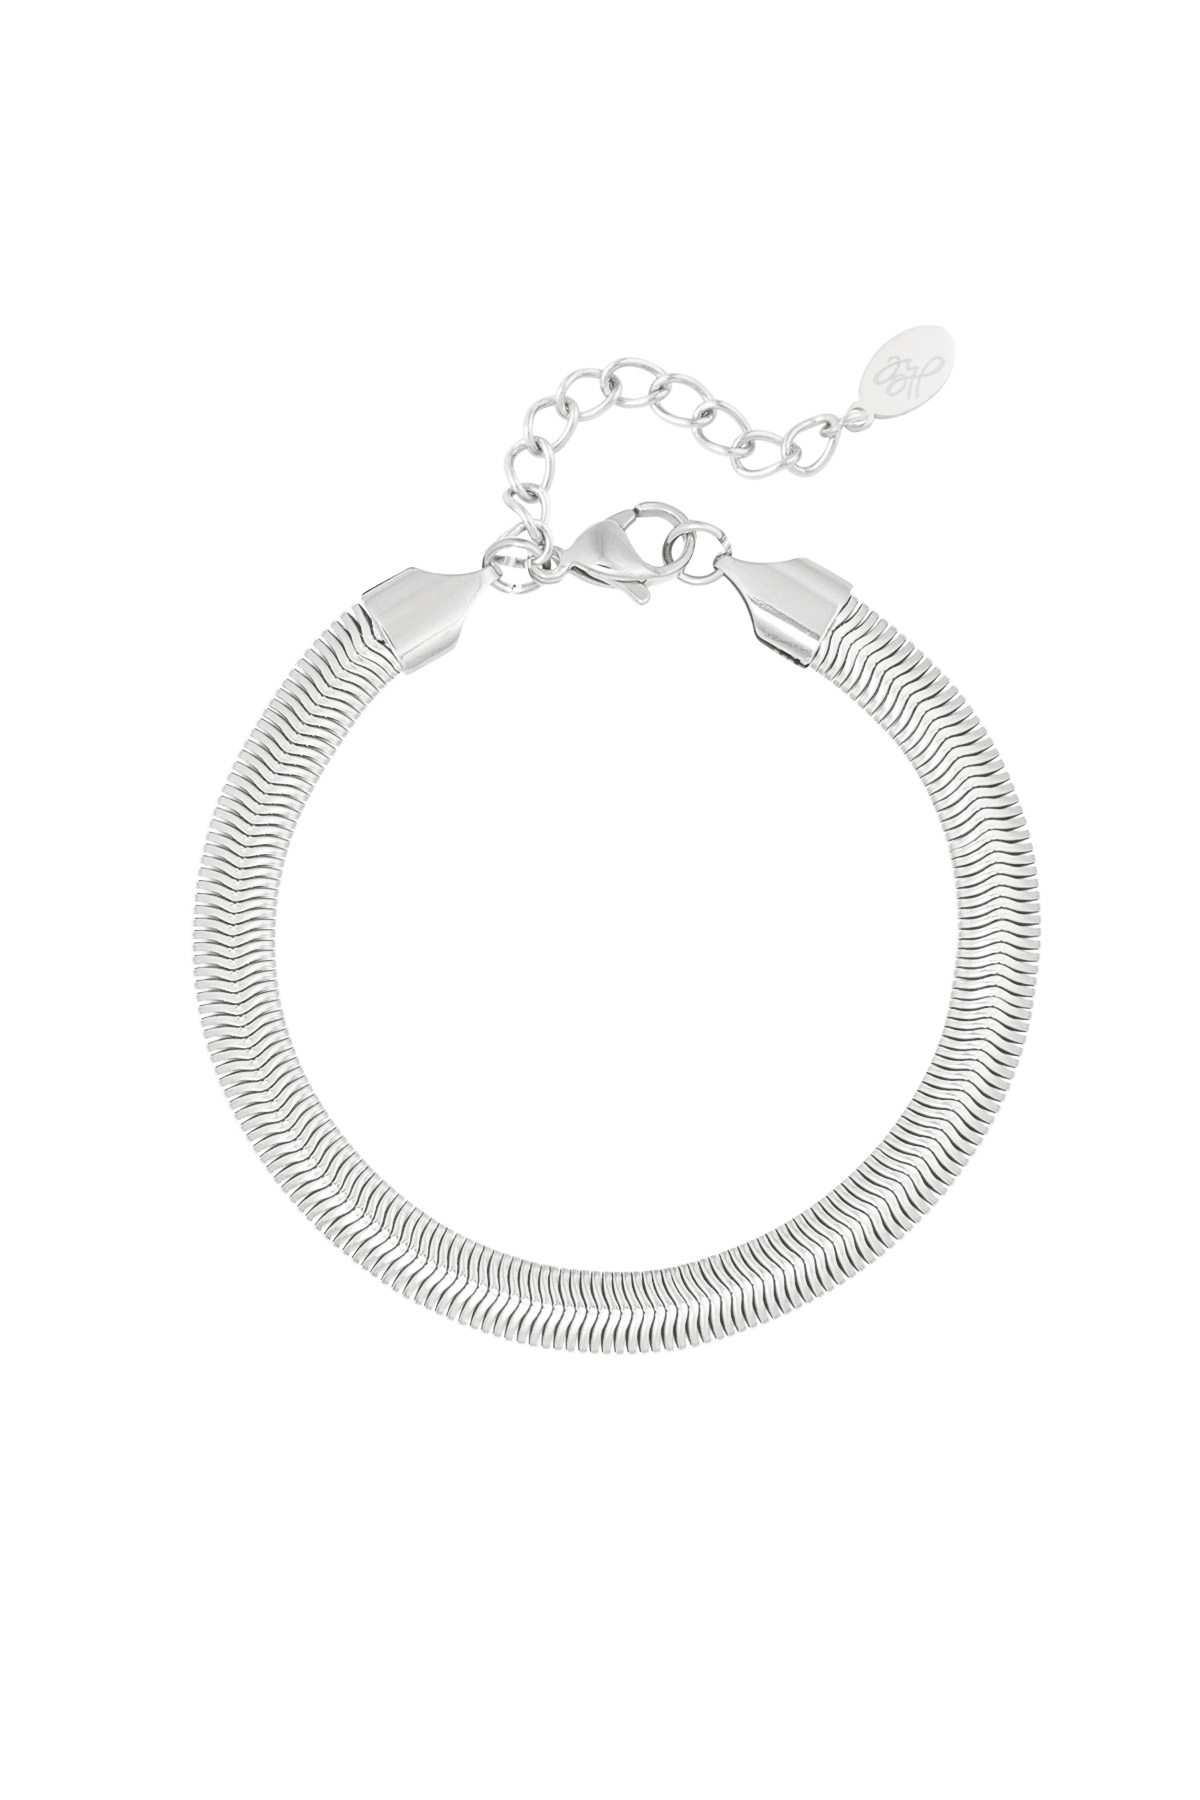 Bracelet plat grossier - argent-6.0MM